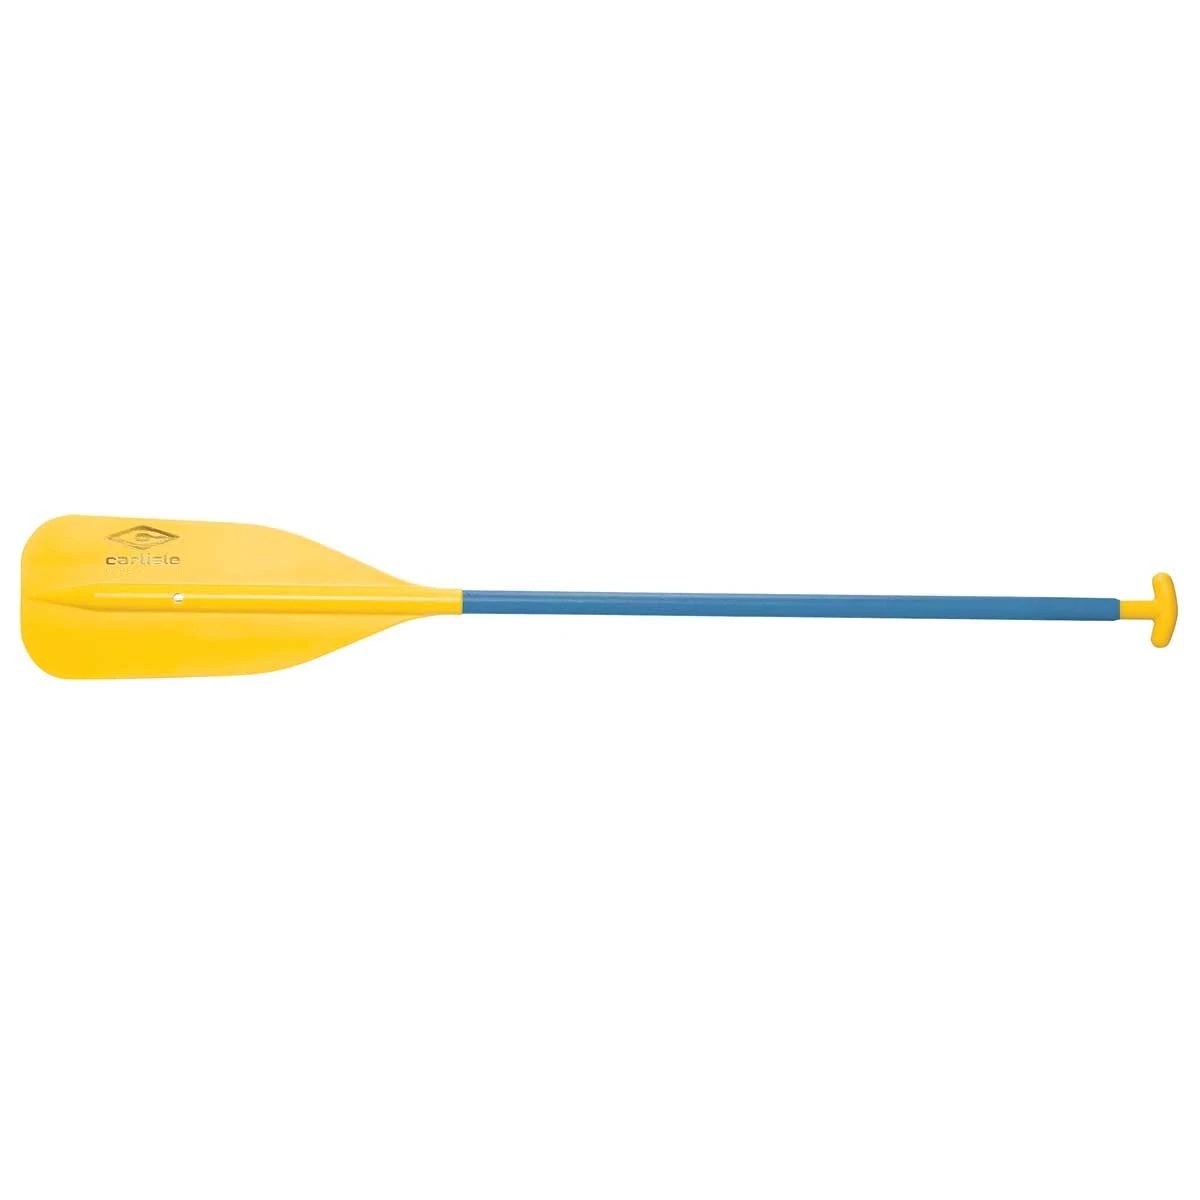 Standard T-Grip Canoe Paddle - Yellow/Blue